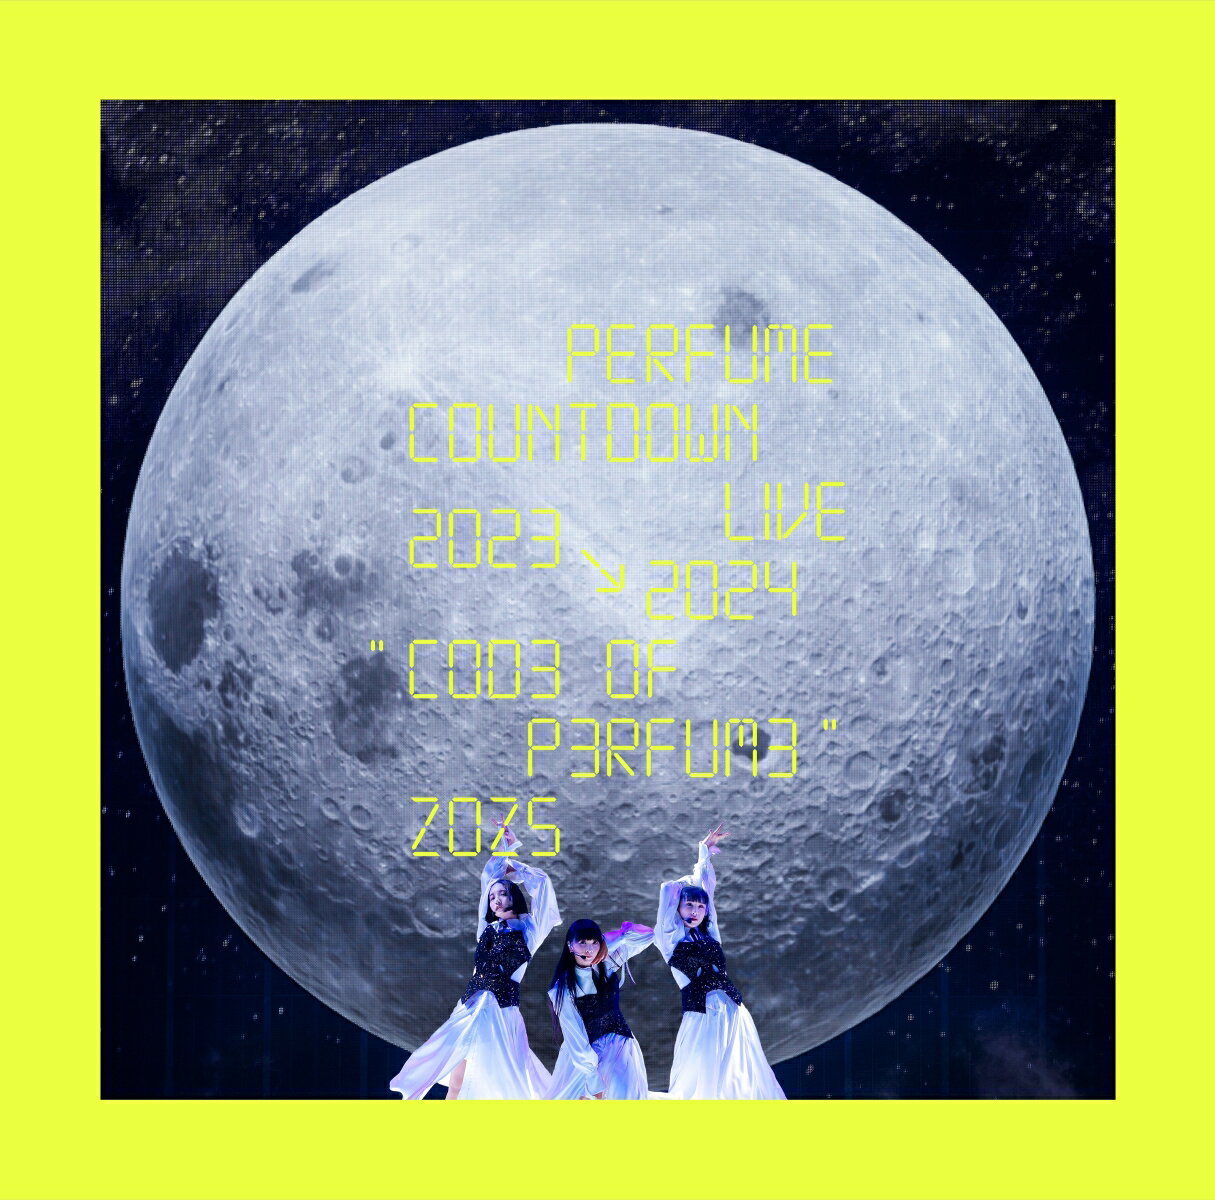 Perfume Countdown Live 2023→2024 “COD3 OF P3RFUM3” ZOZ5(通常盤DVD)